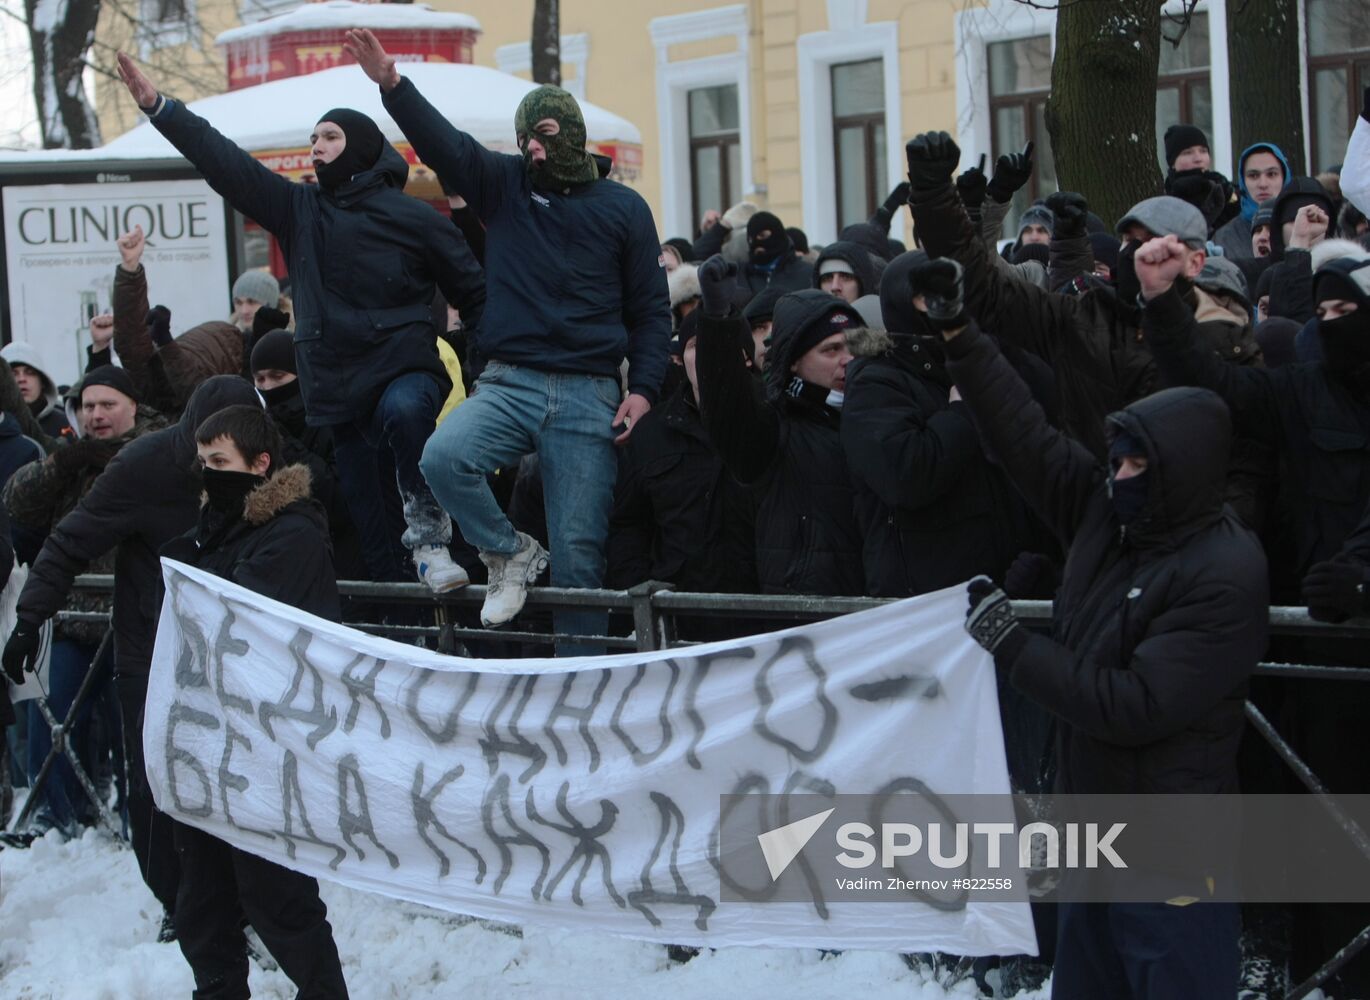 St. Peterburg rally protests Yegor Sviridov's death